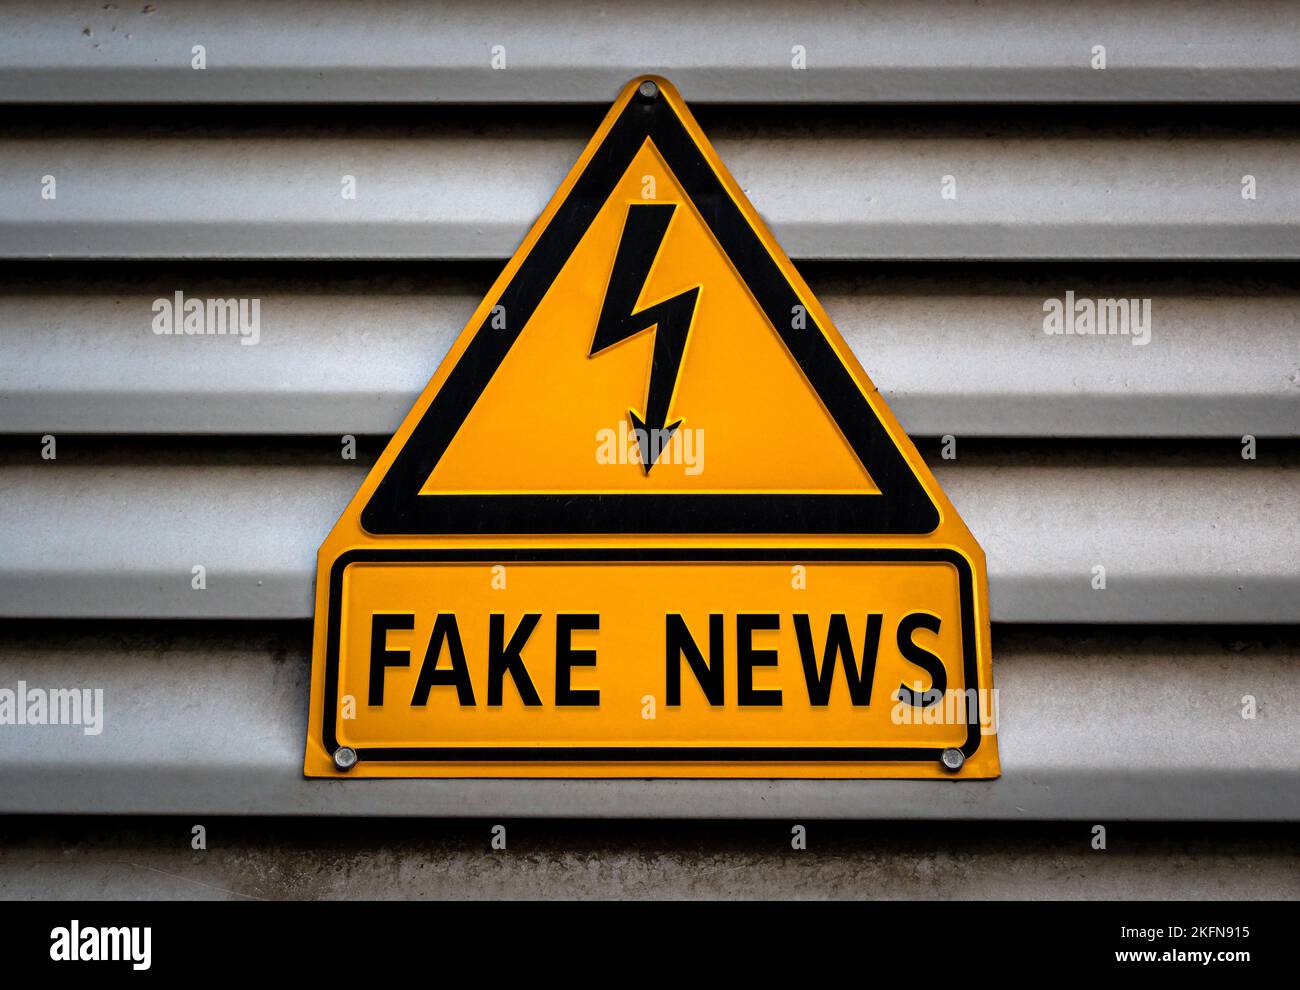 Fake News information sign Stock Photo